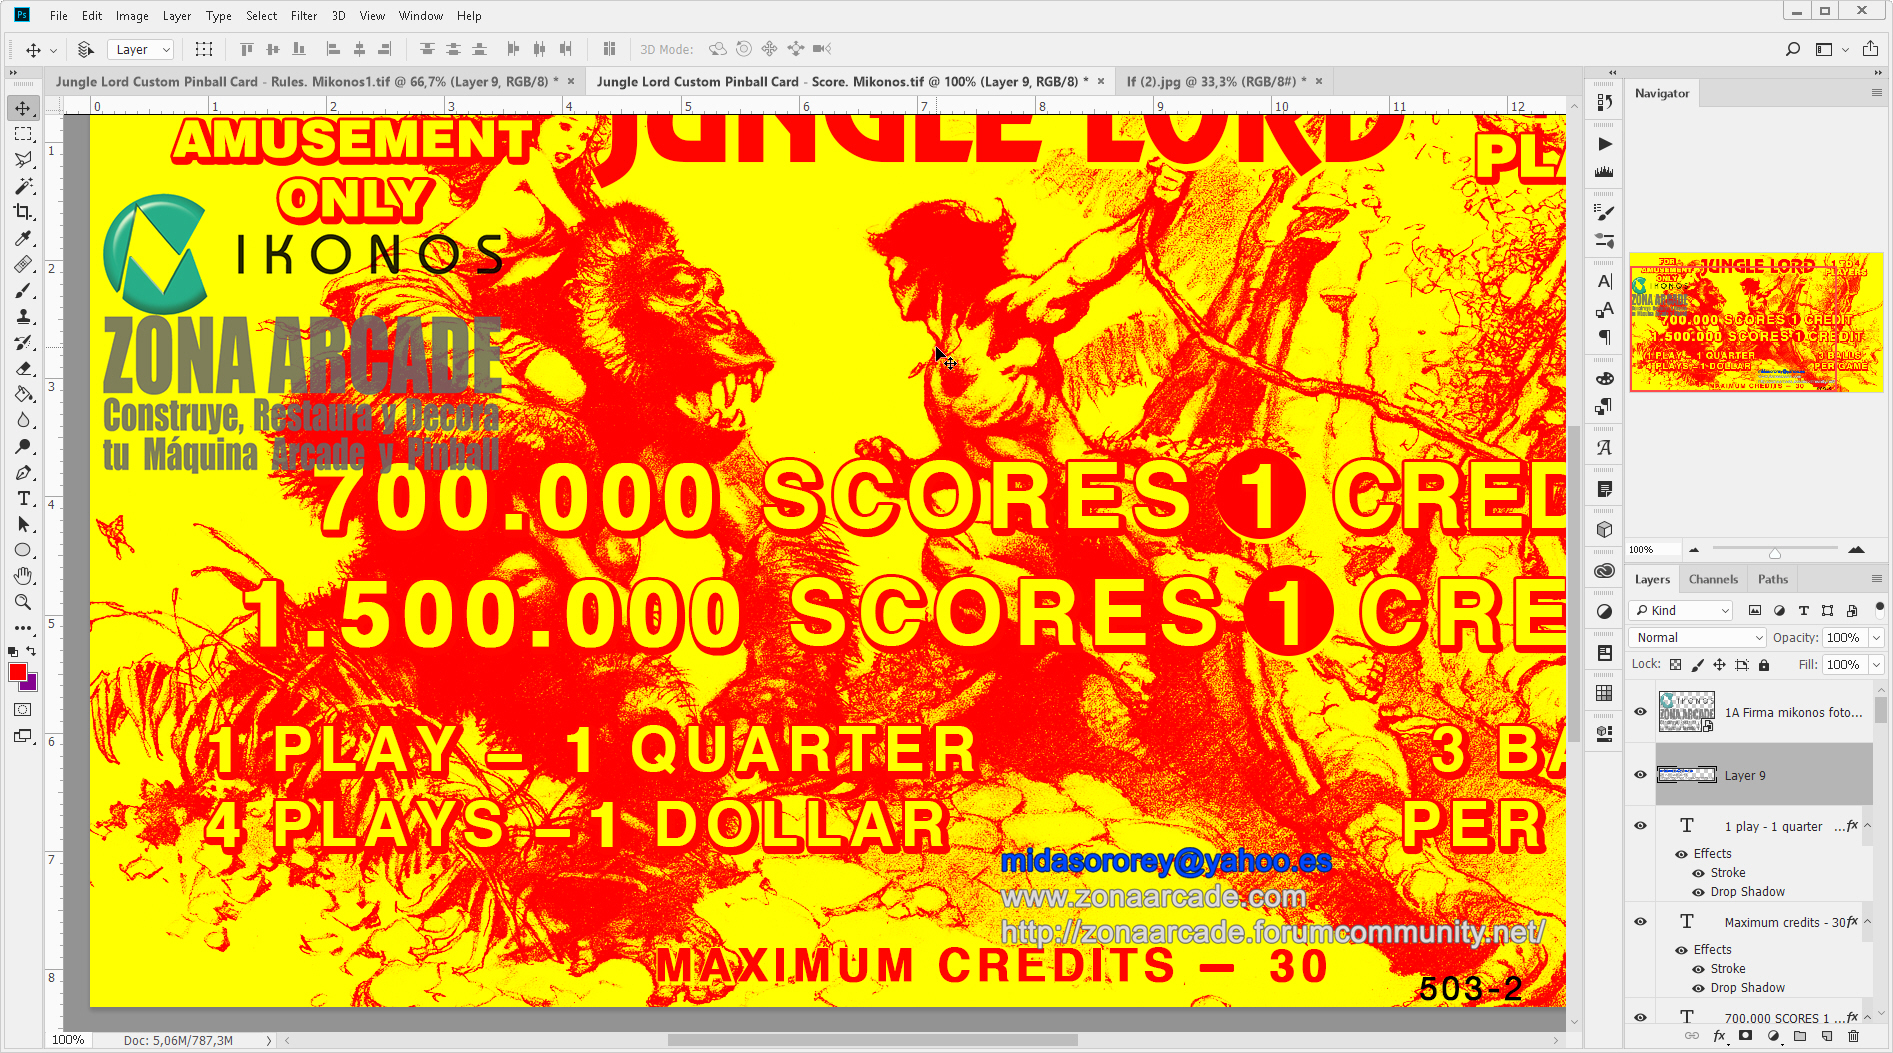 Jungle-Lord-Custom-Pinball-Card-Score-Mikonos2